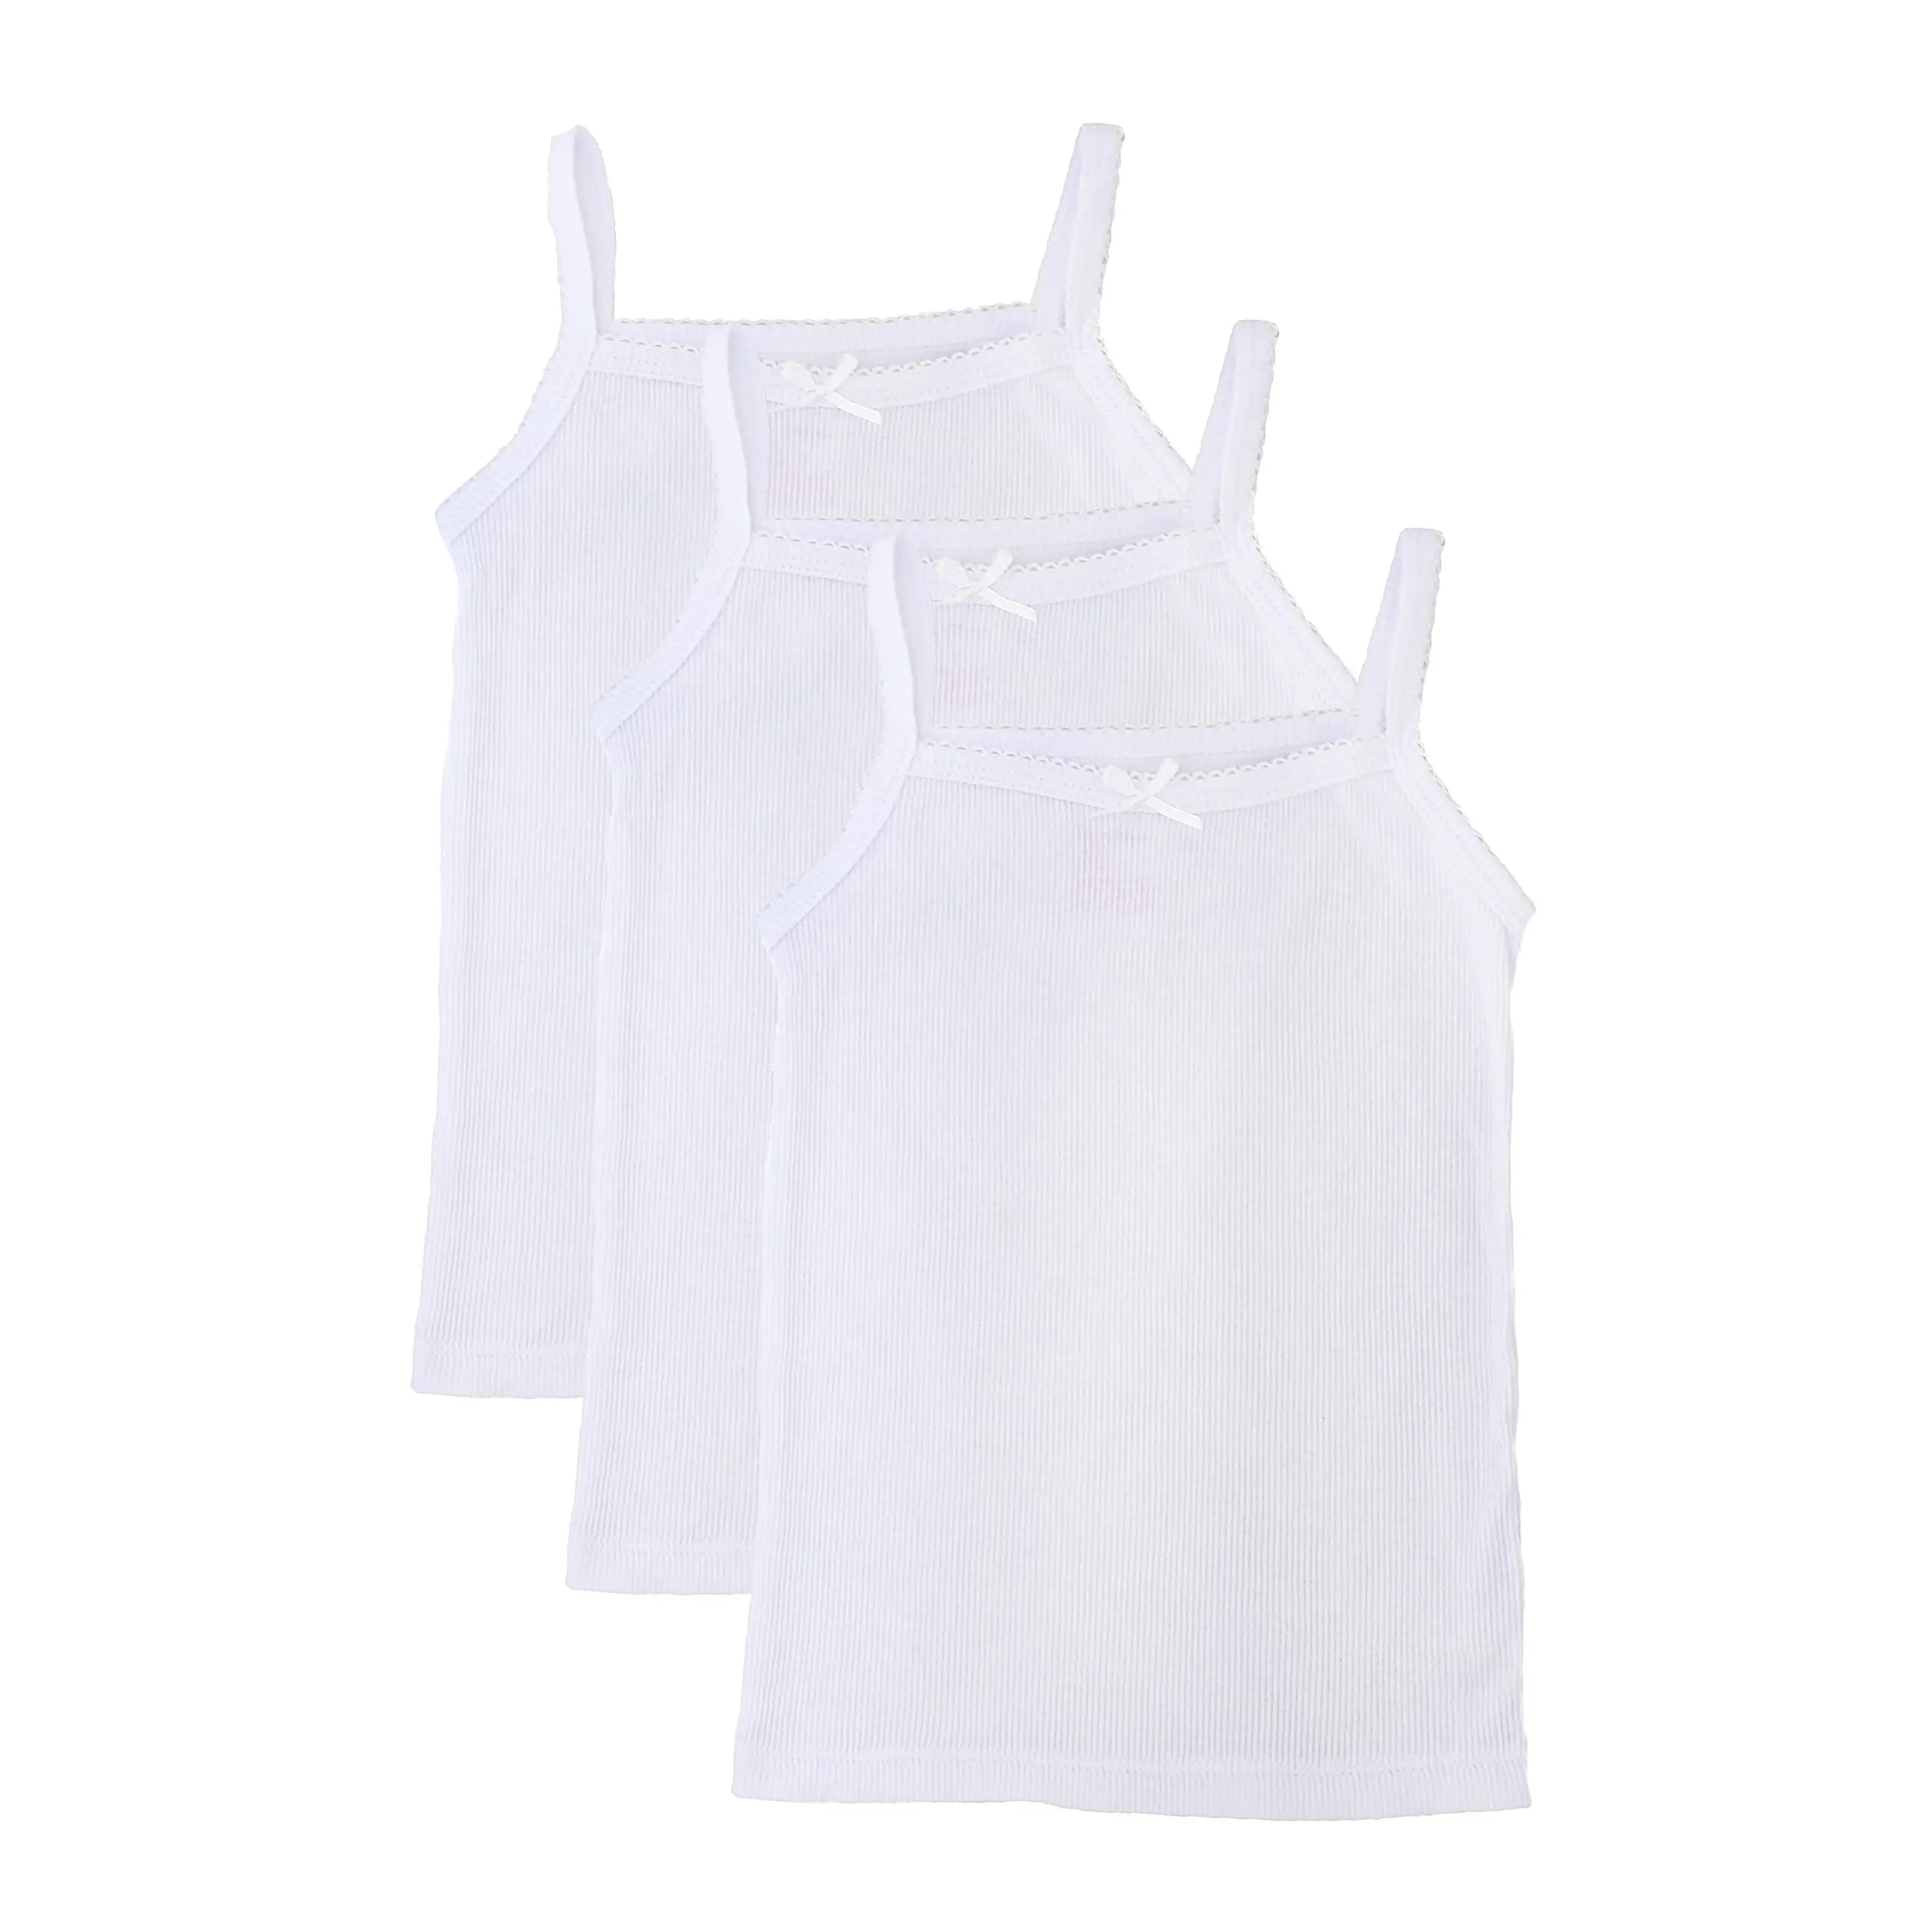 Girls Solid White Snug Fit Tagless Cami Vest - 100% Cotton Super Soft Undershirts (3/Pack)